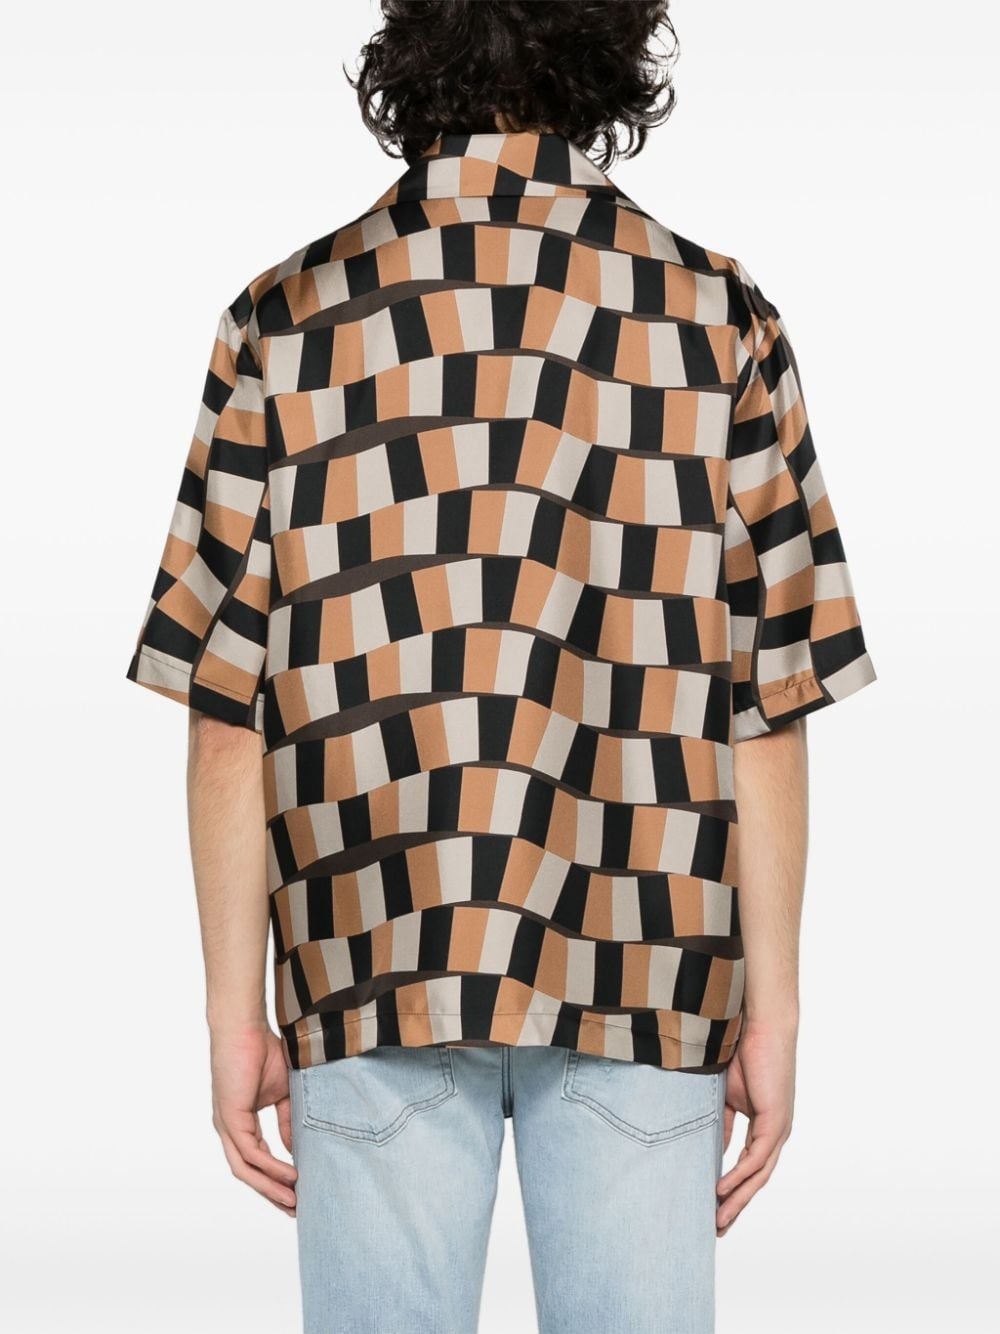 Snake Checker bowling shirt - 4